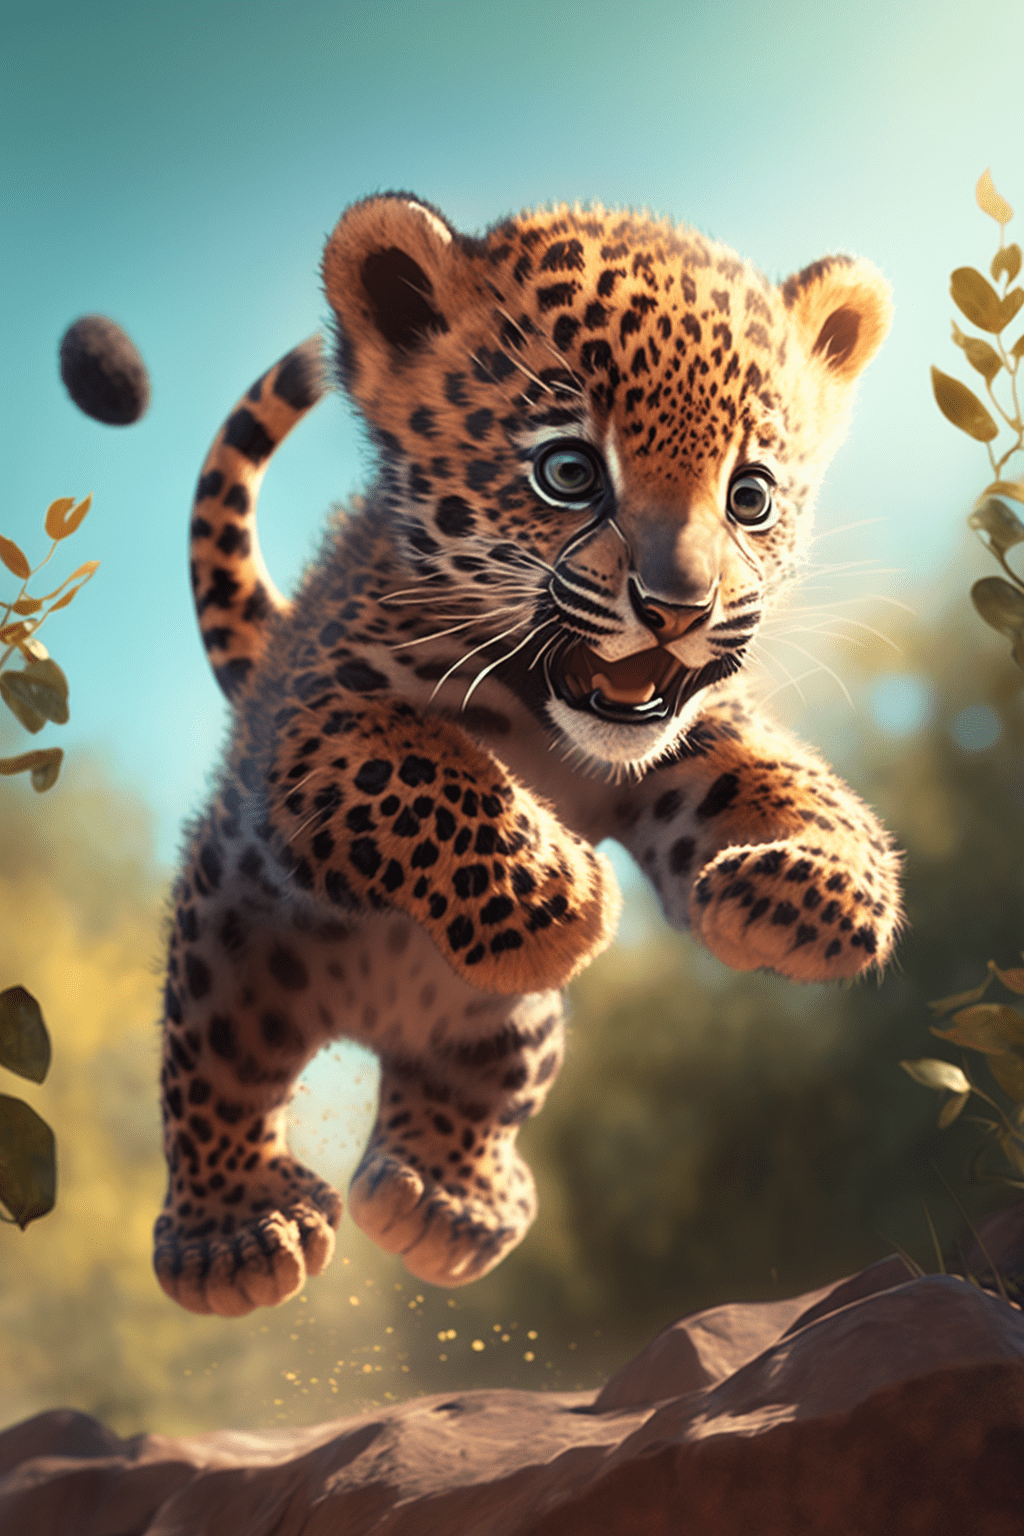 a cute baby jaguar jumping, in Pixar style, disney style,